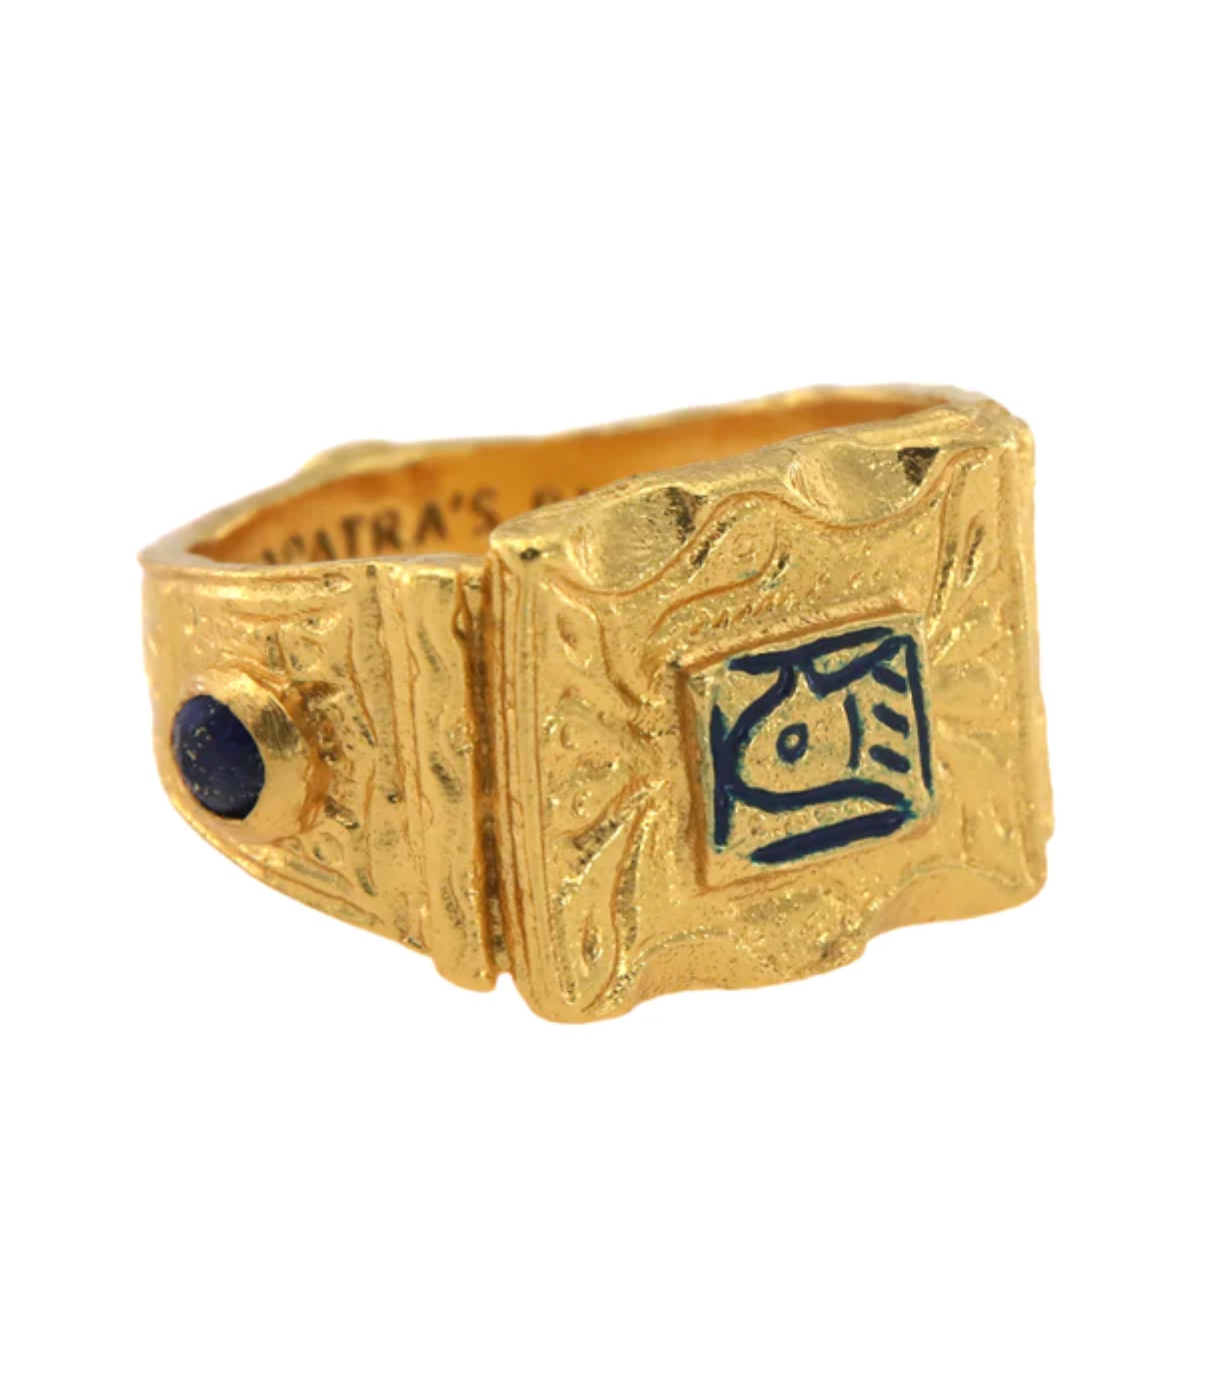 Samiram Ring with Lapis Lazuli